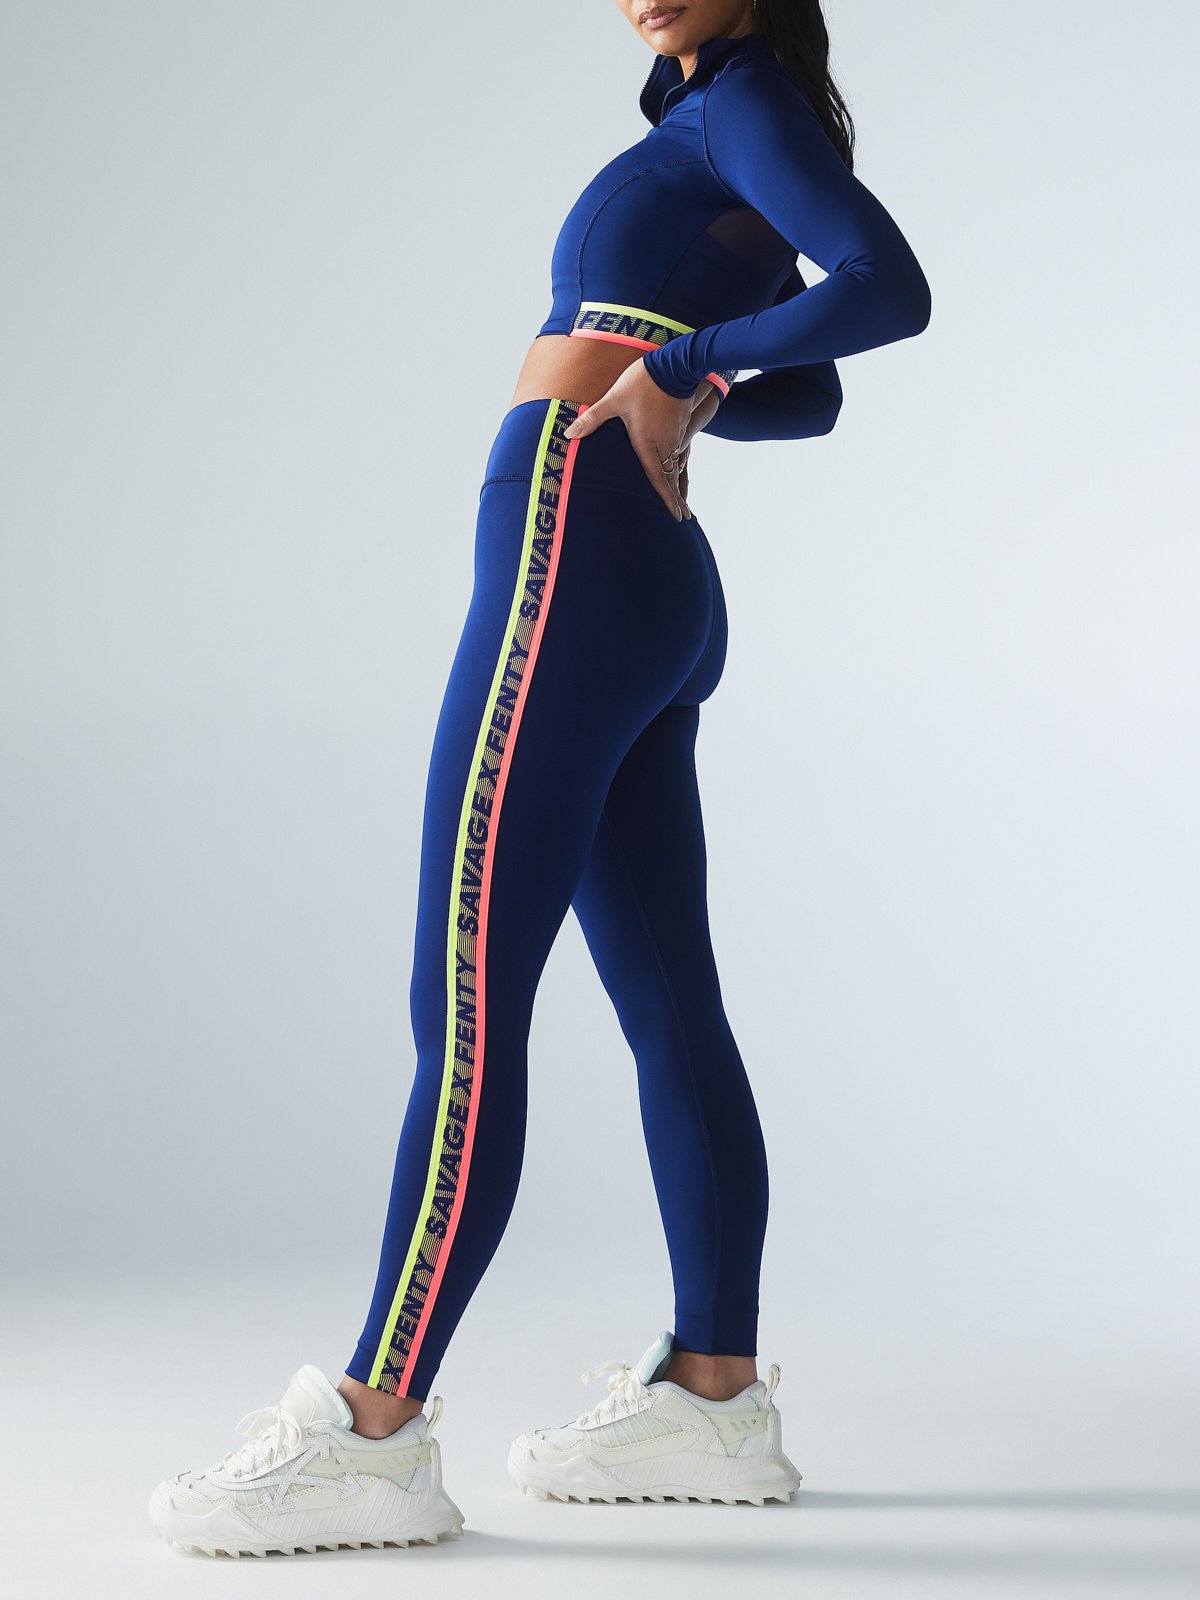 Savage X Fenty Sport X Mesh High-Waist Legging ($84.95), Precious Lee  Talks Size-Inclusive Activewear and Advice For Aspiring Models